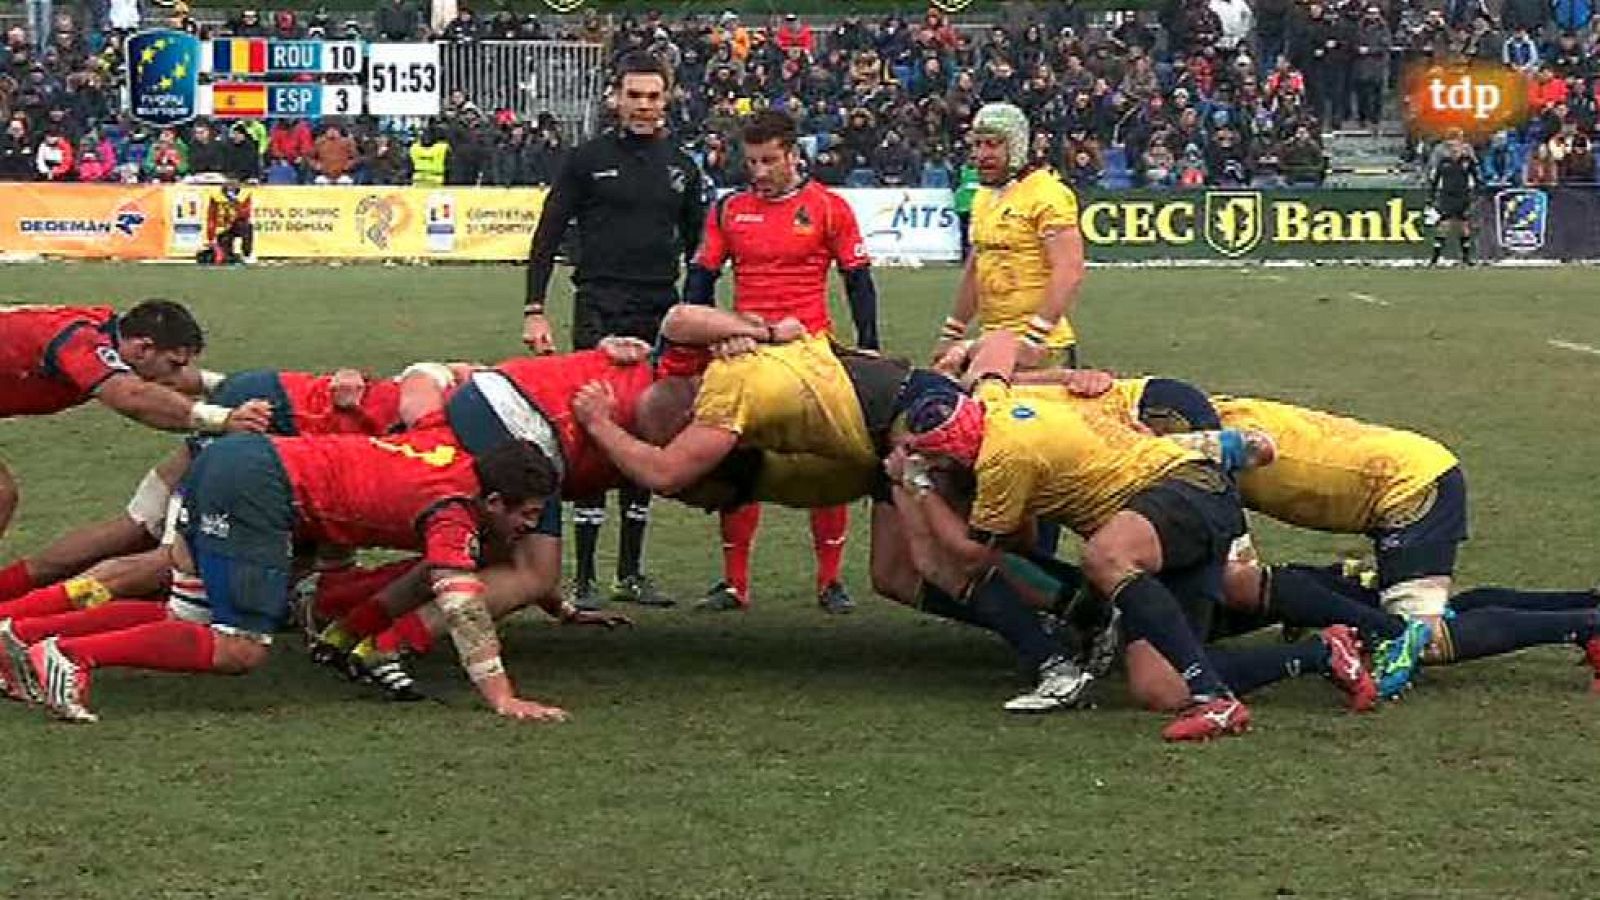 Rugby - Campeonato de Europa Masculino. Rumanía - España, en Bucarest (Rumanía) (18/02/2017)